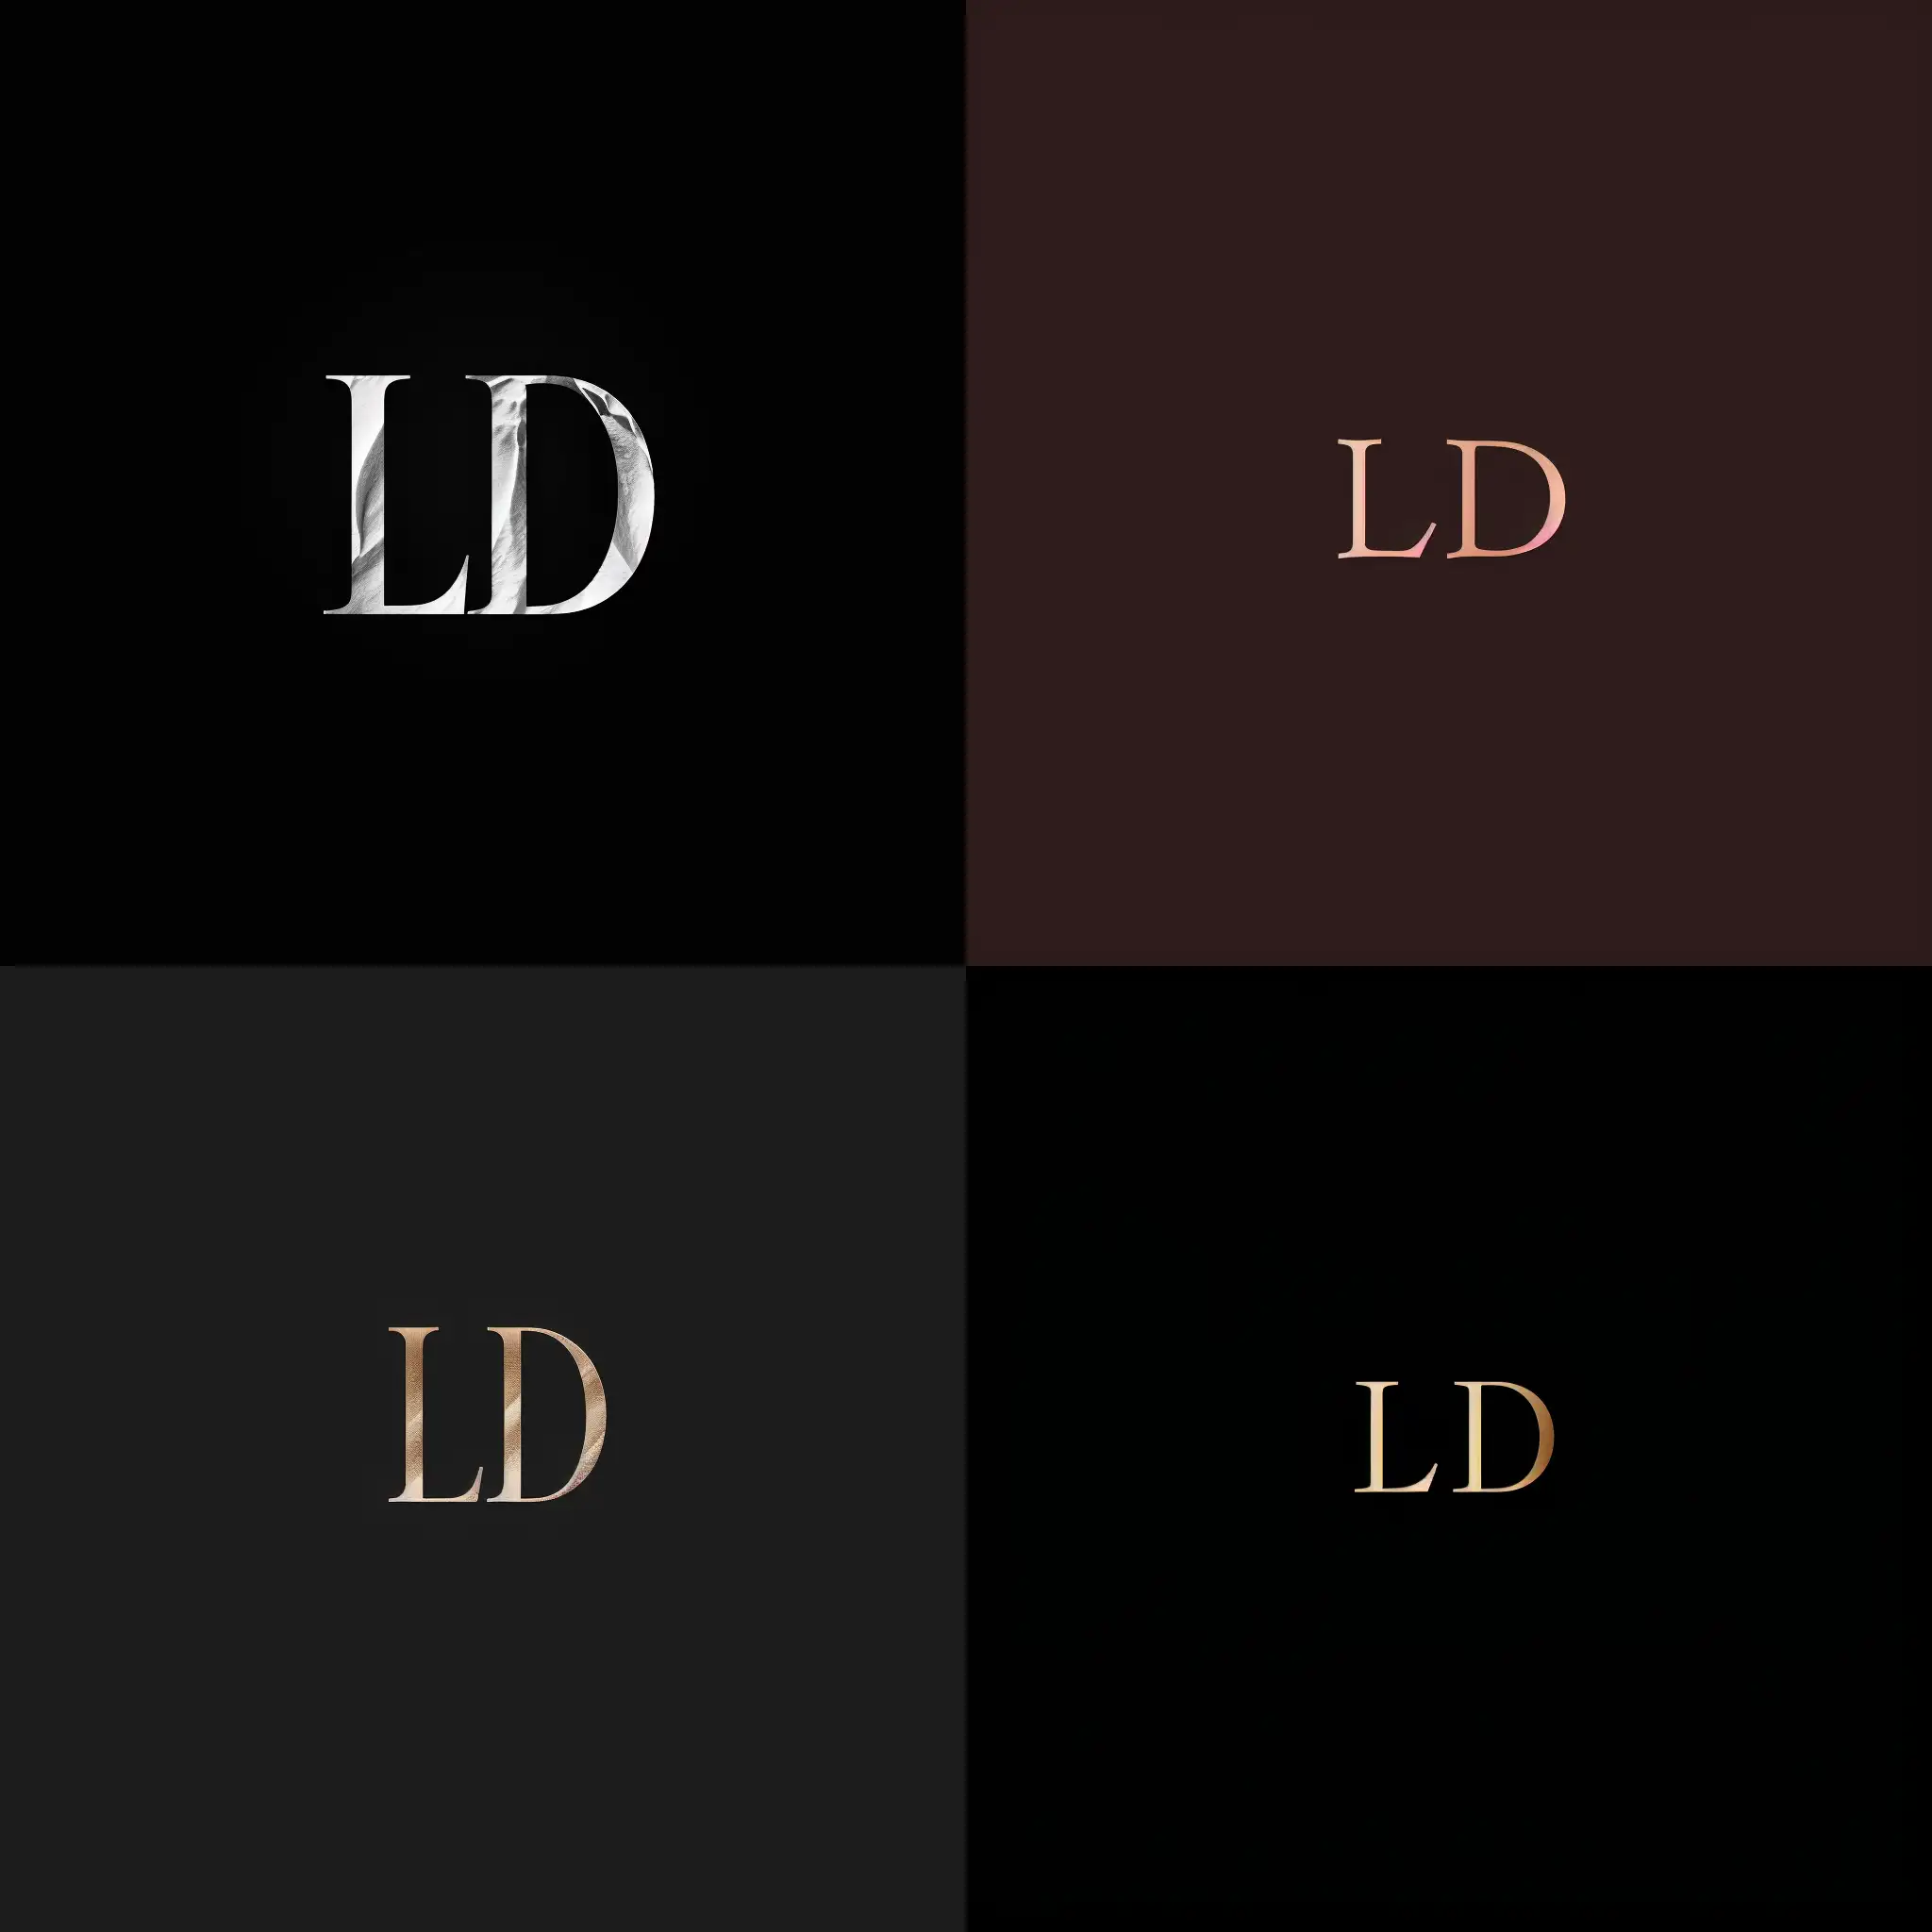 logo, womenswear brand, name "LD", interesting combination of letters, elegant font, elegant, elegant, elegance, expensive, femininity, sensuality, dynamic, lightness, minimalism